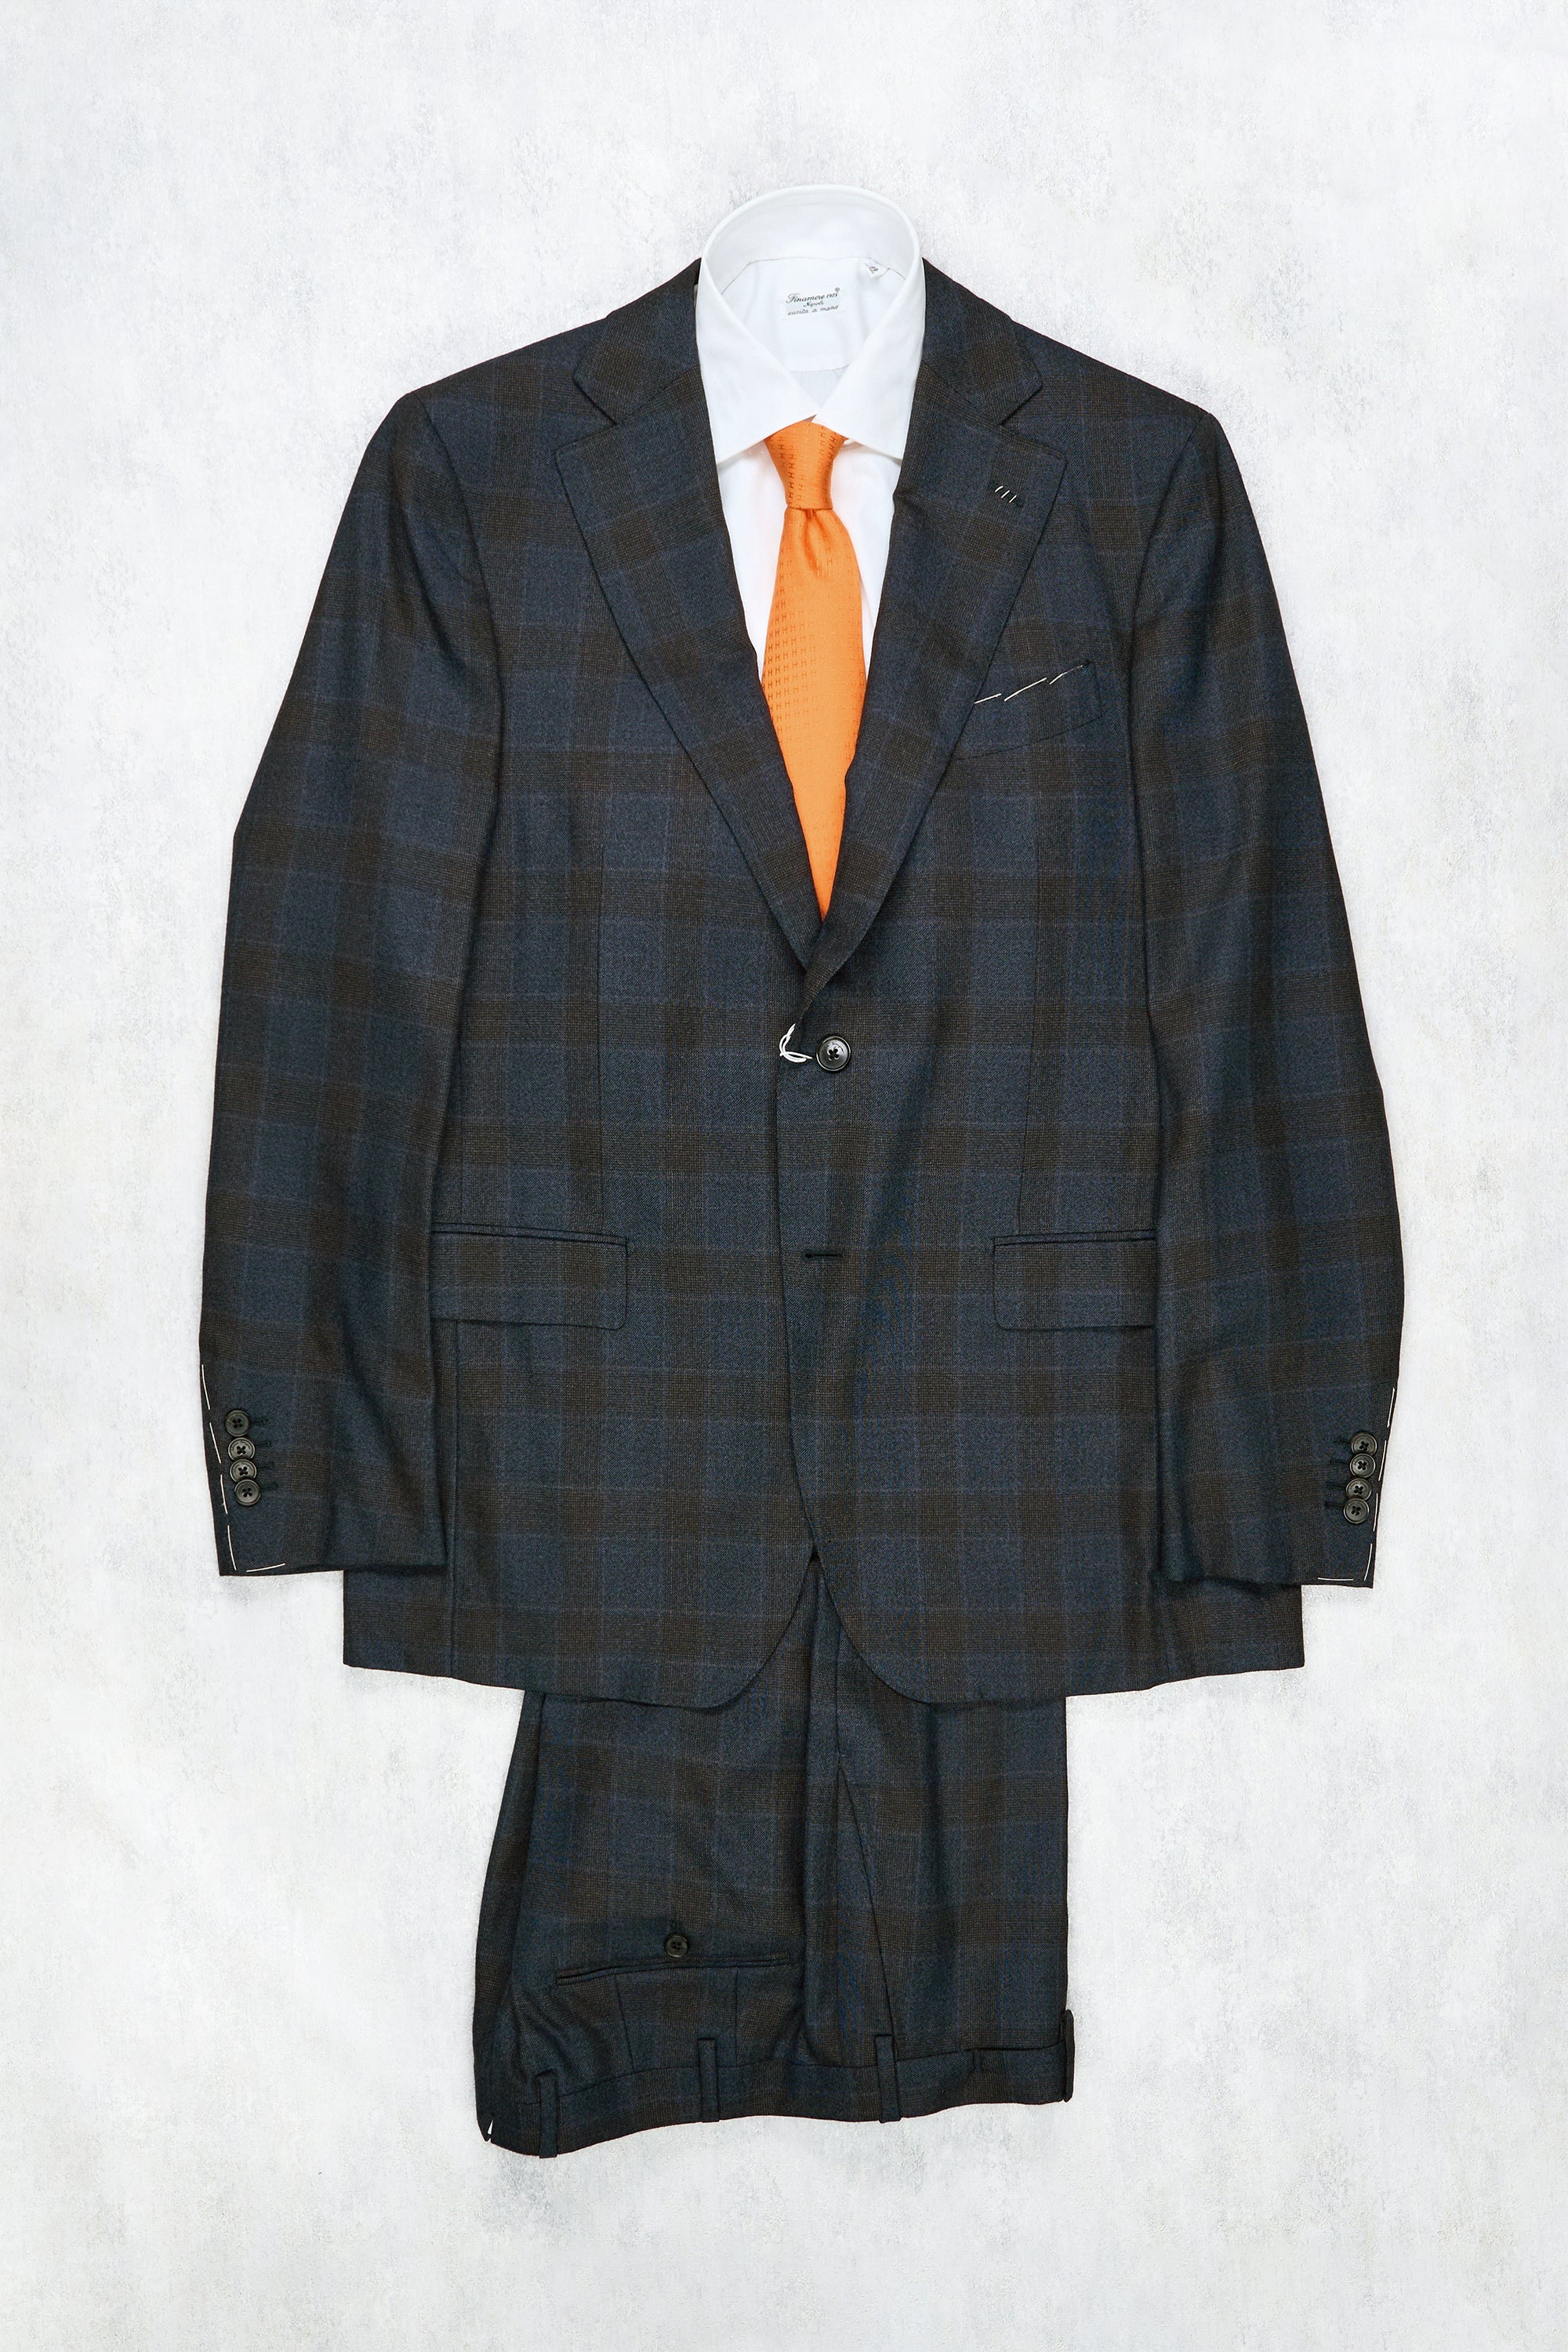 Salvatore Ferragamo Navy/Brown Check Wool Suit